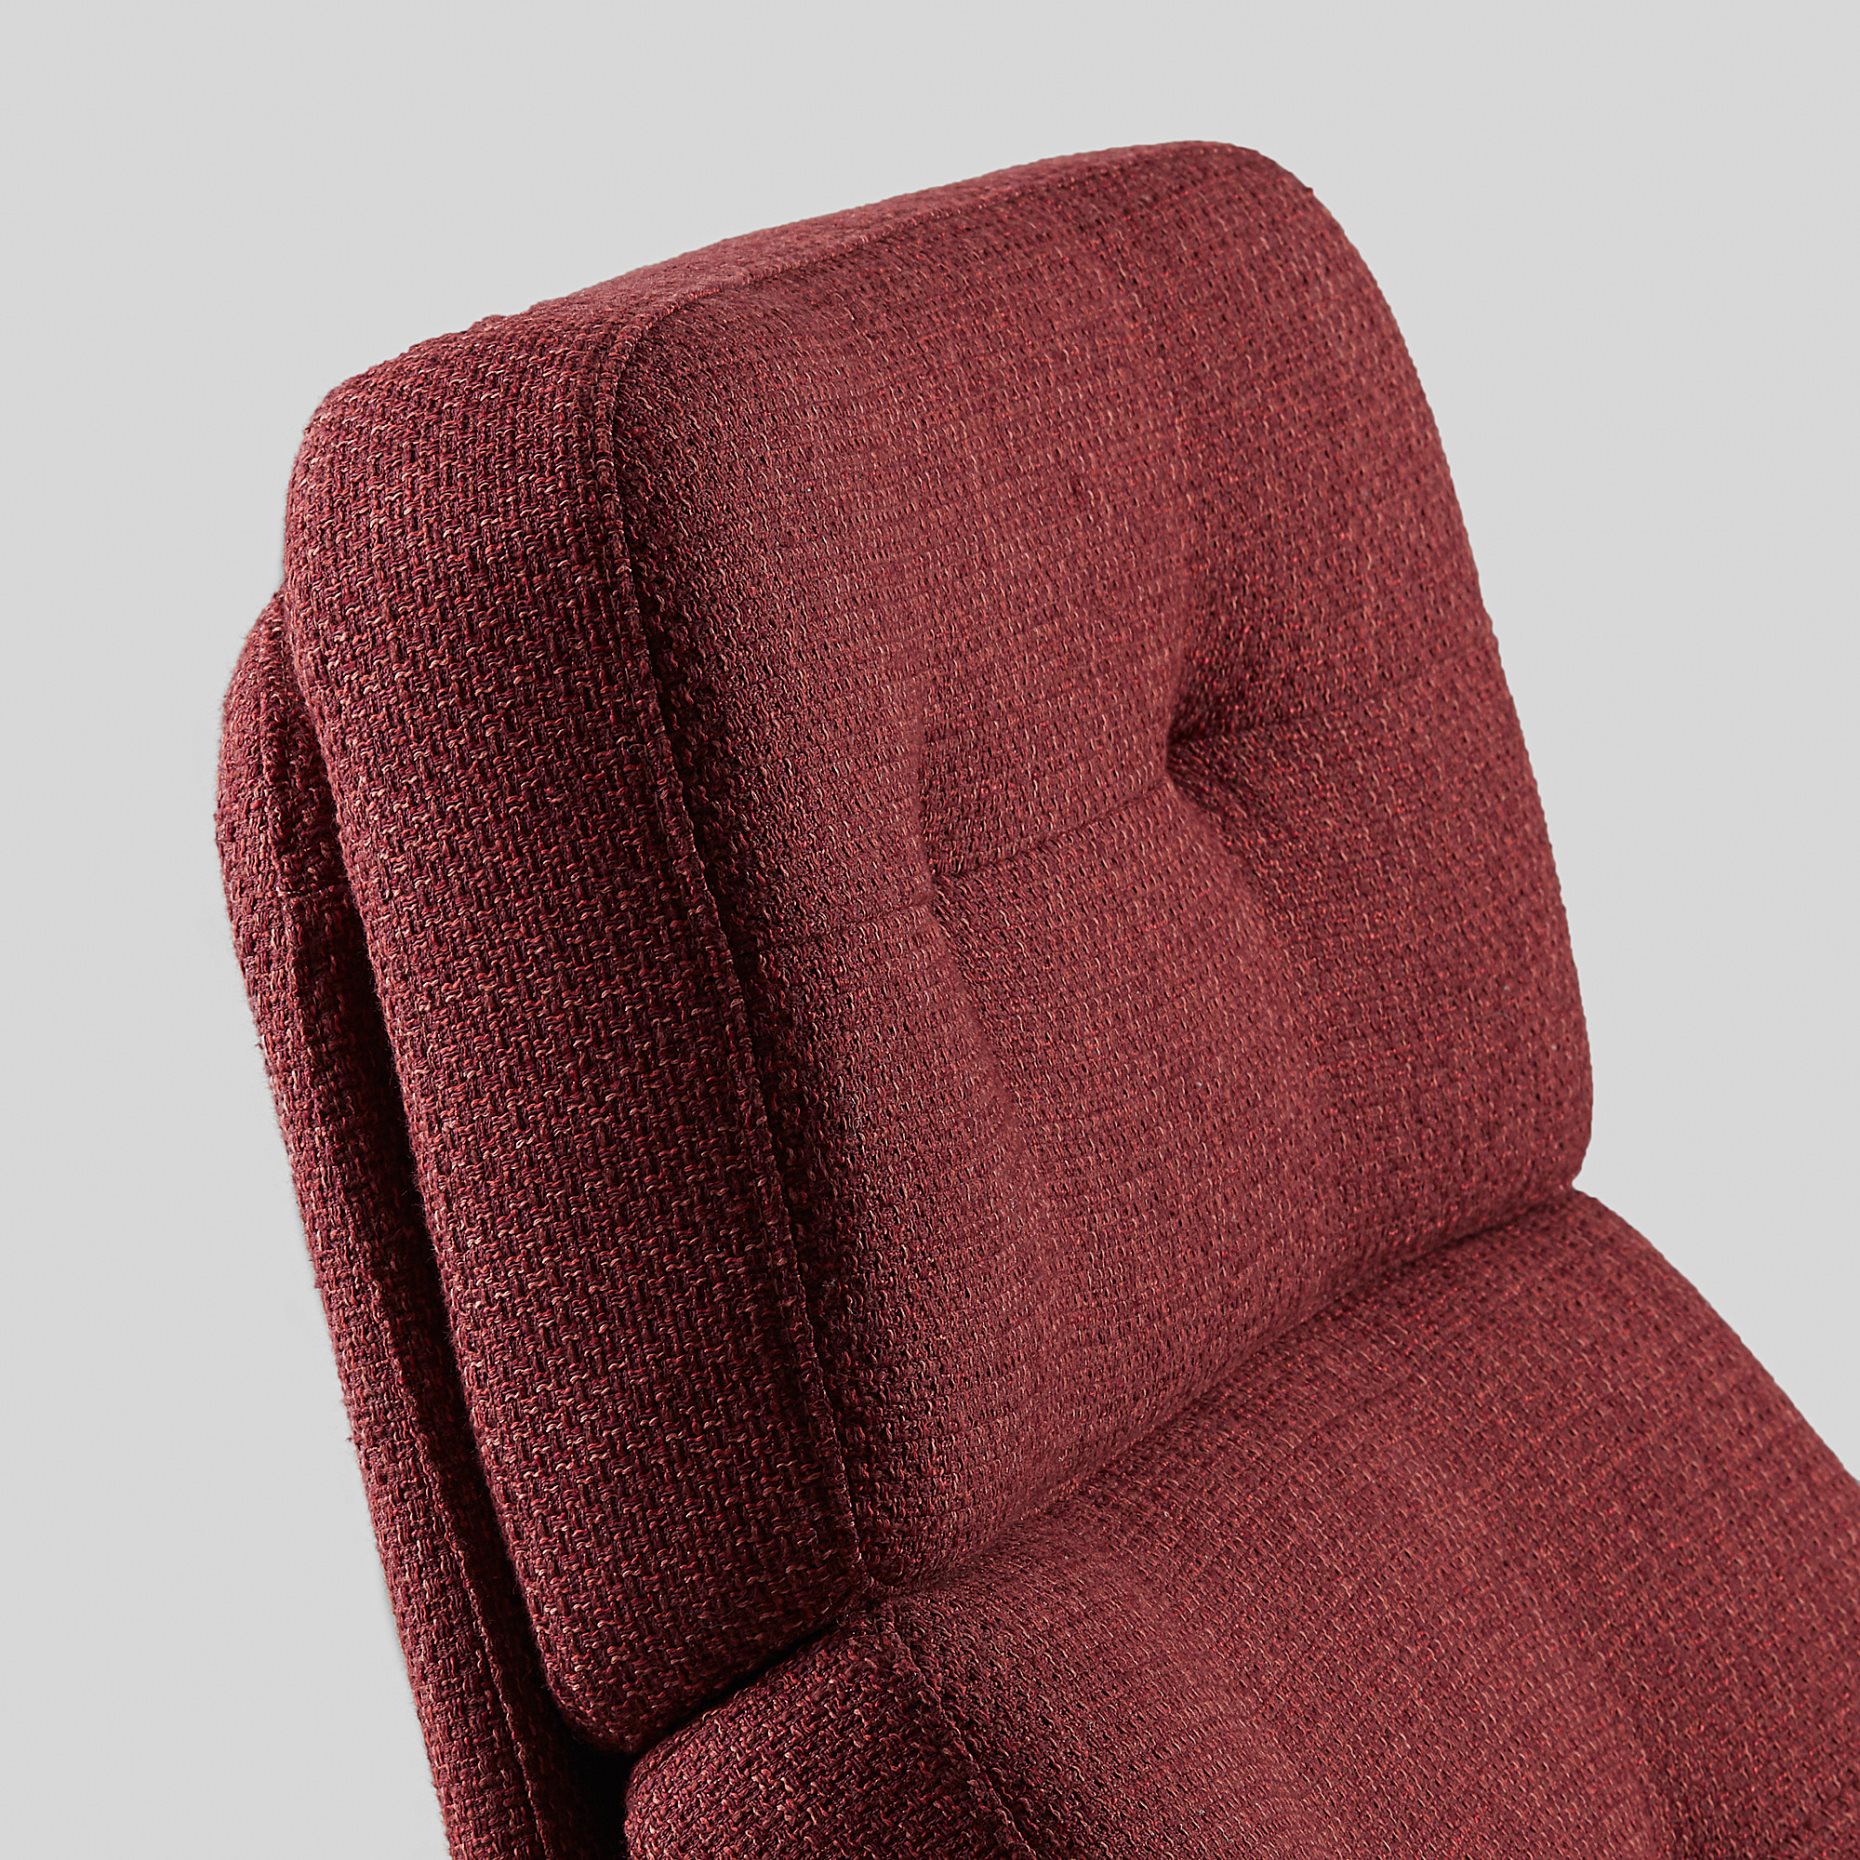 HAVBERG, swivel armchair, 205.148.95